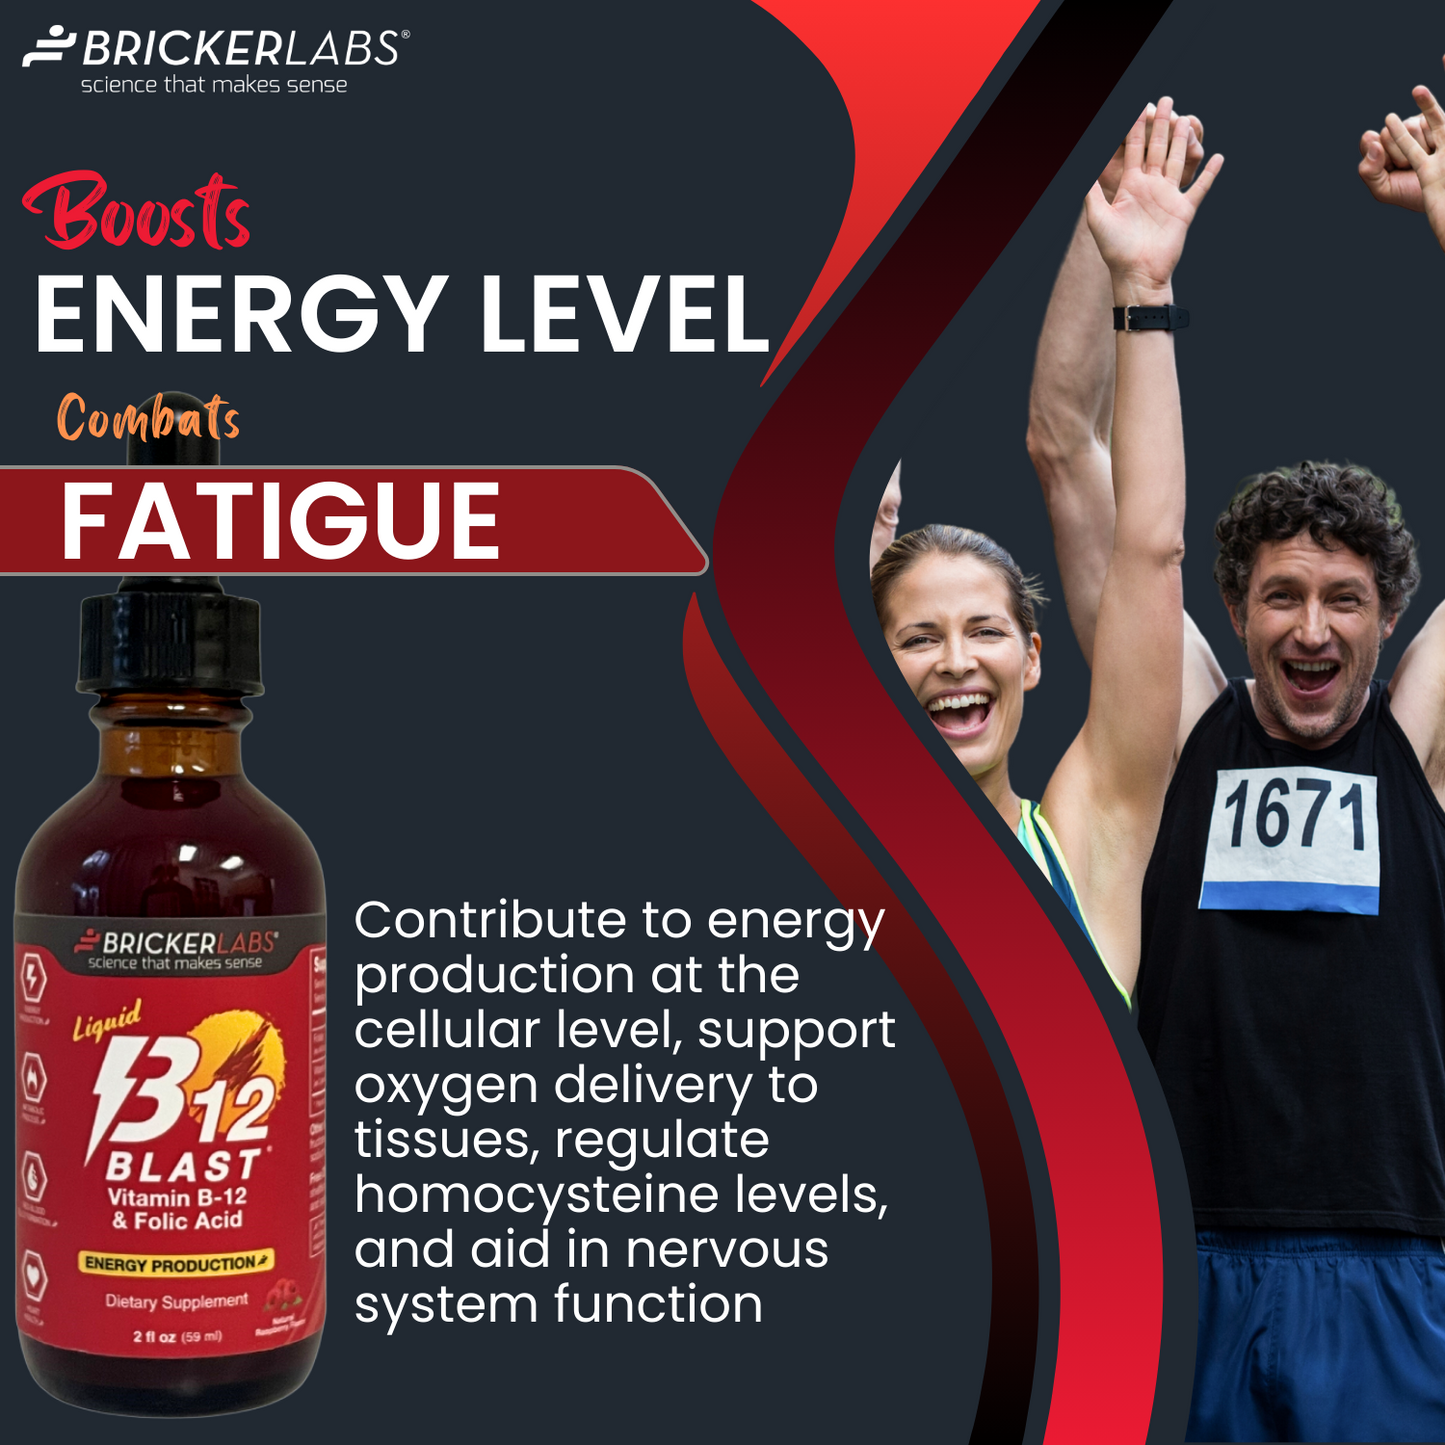 B-12 Blast® Vitamin B12 & Folic Acid - Sublingual Liquid Vitamin B12 - Energy Vitamins